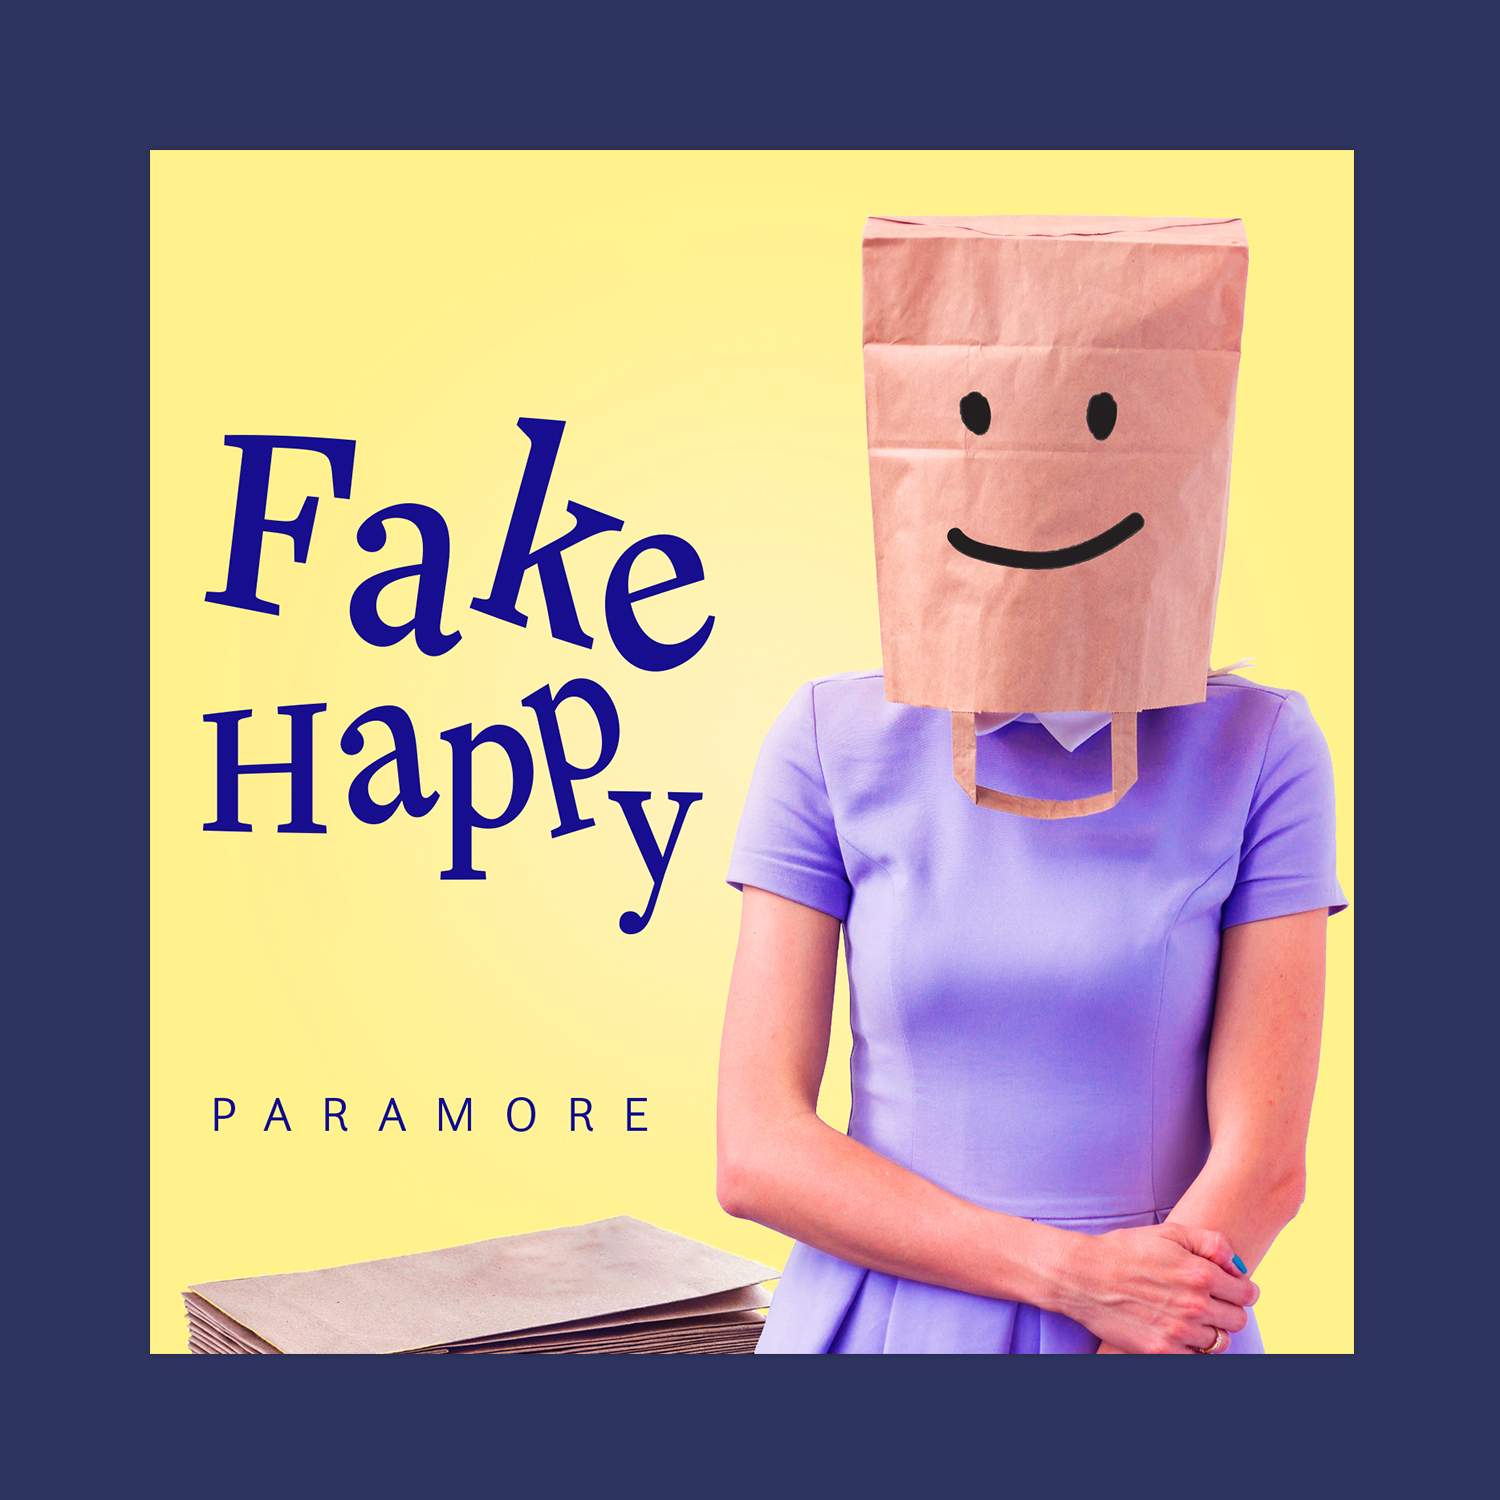 Album Cover Design - Fake Happy Portfolio Image - Designs by Martin Holloway